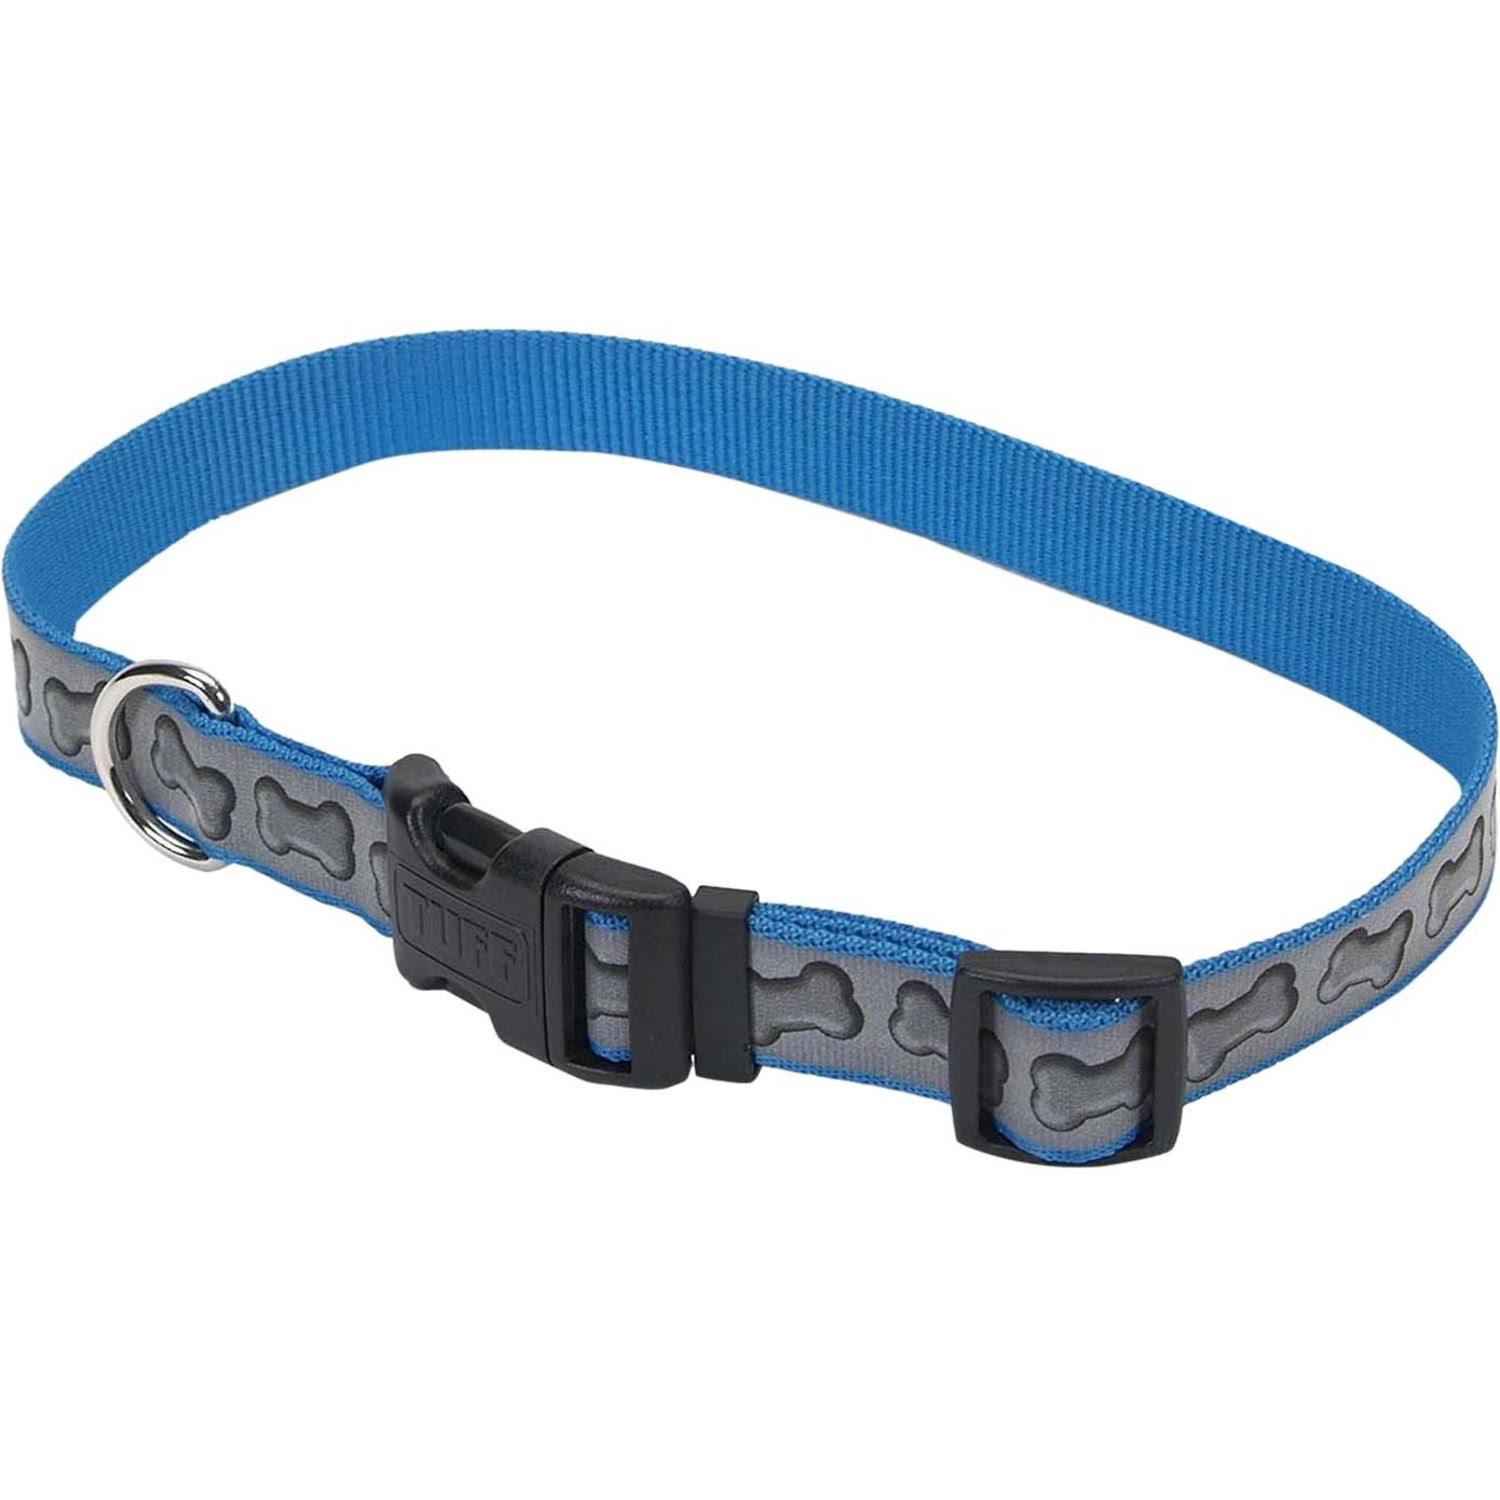 Blue Lazer Brite Reflective Dog Collar - 3/8" x 8-12", Blue